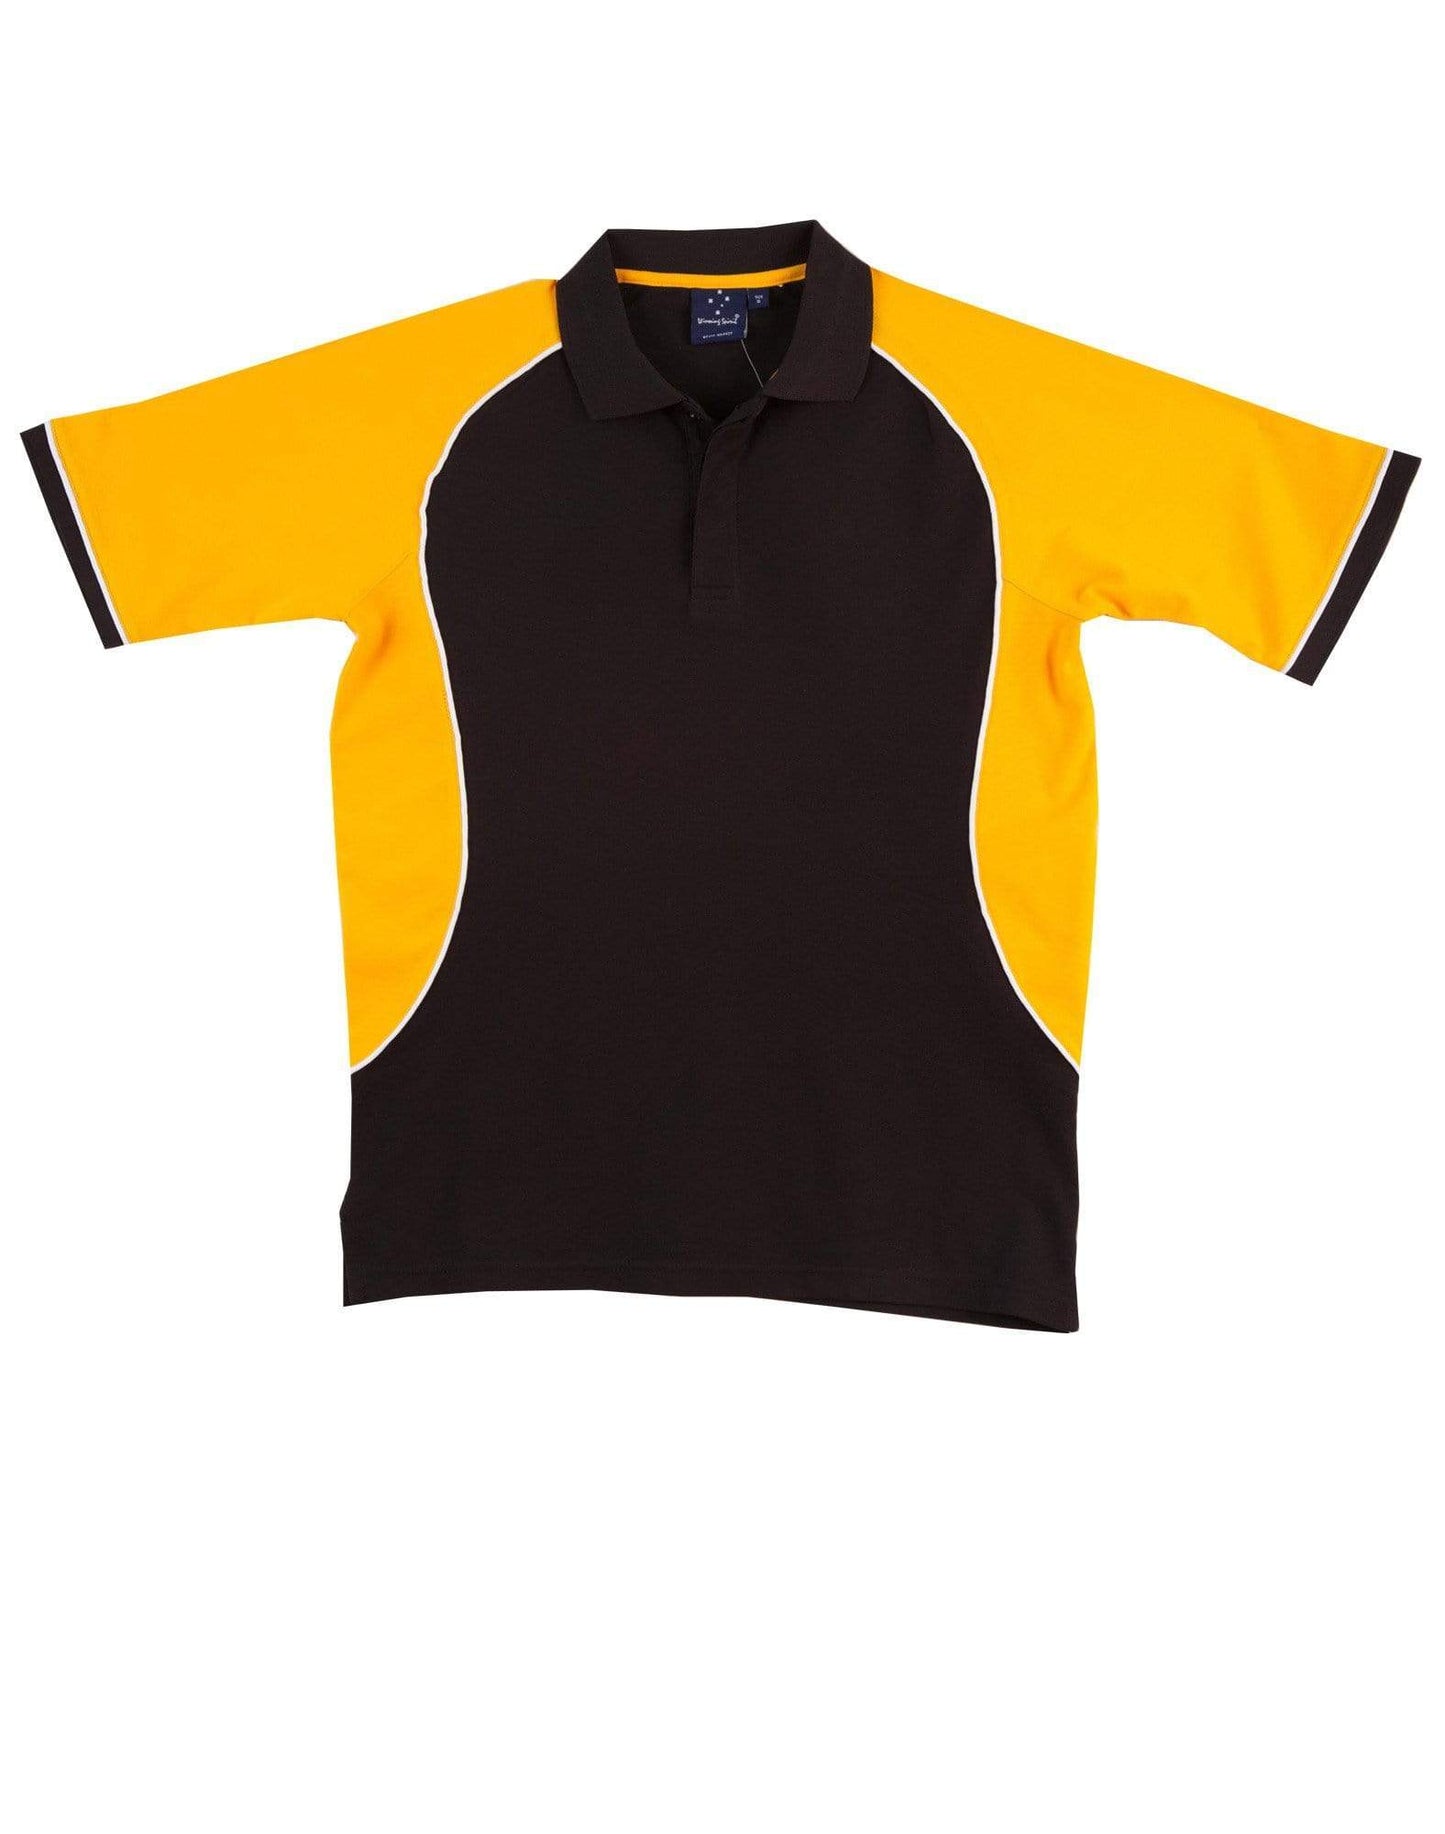 Winning Spirit Casual Wear Black/White/Gold / S Winning Spirit Arena Polo Shirt  Men's Ps77